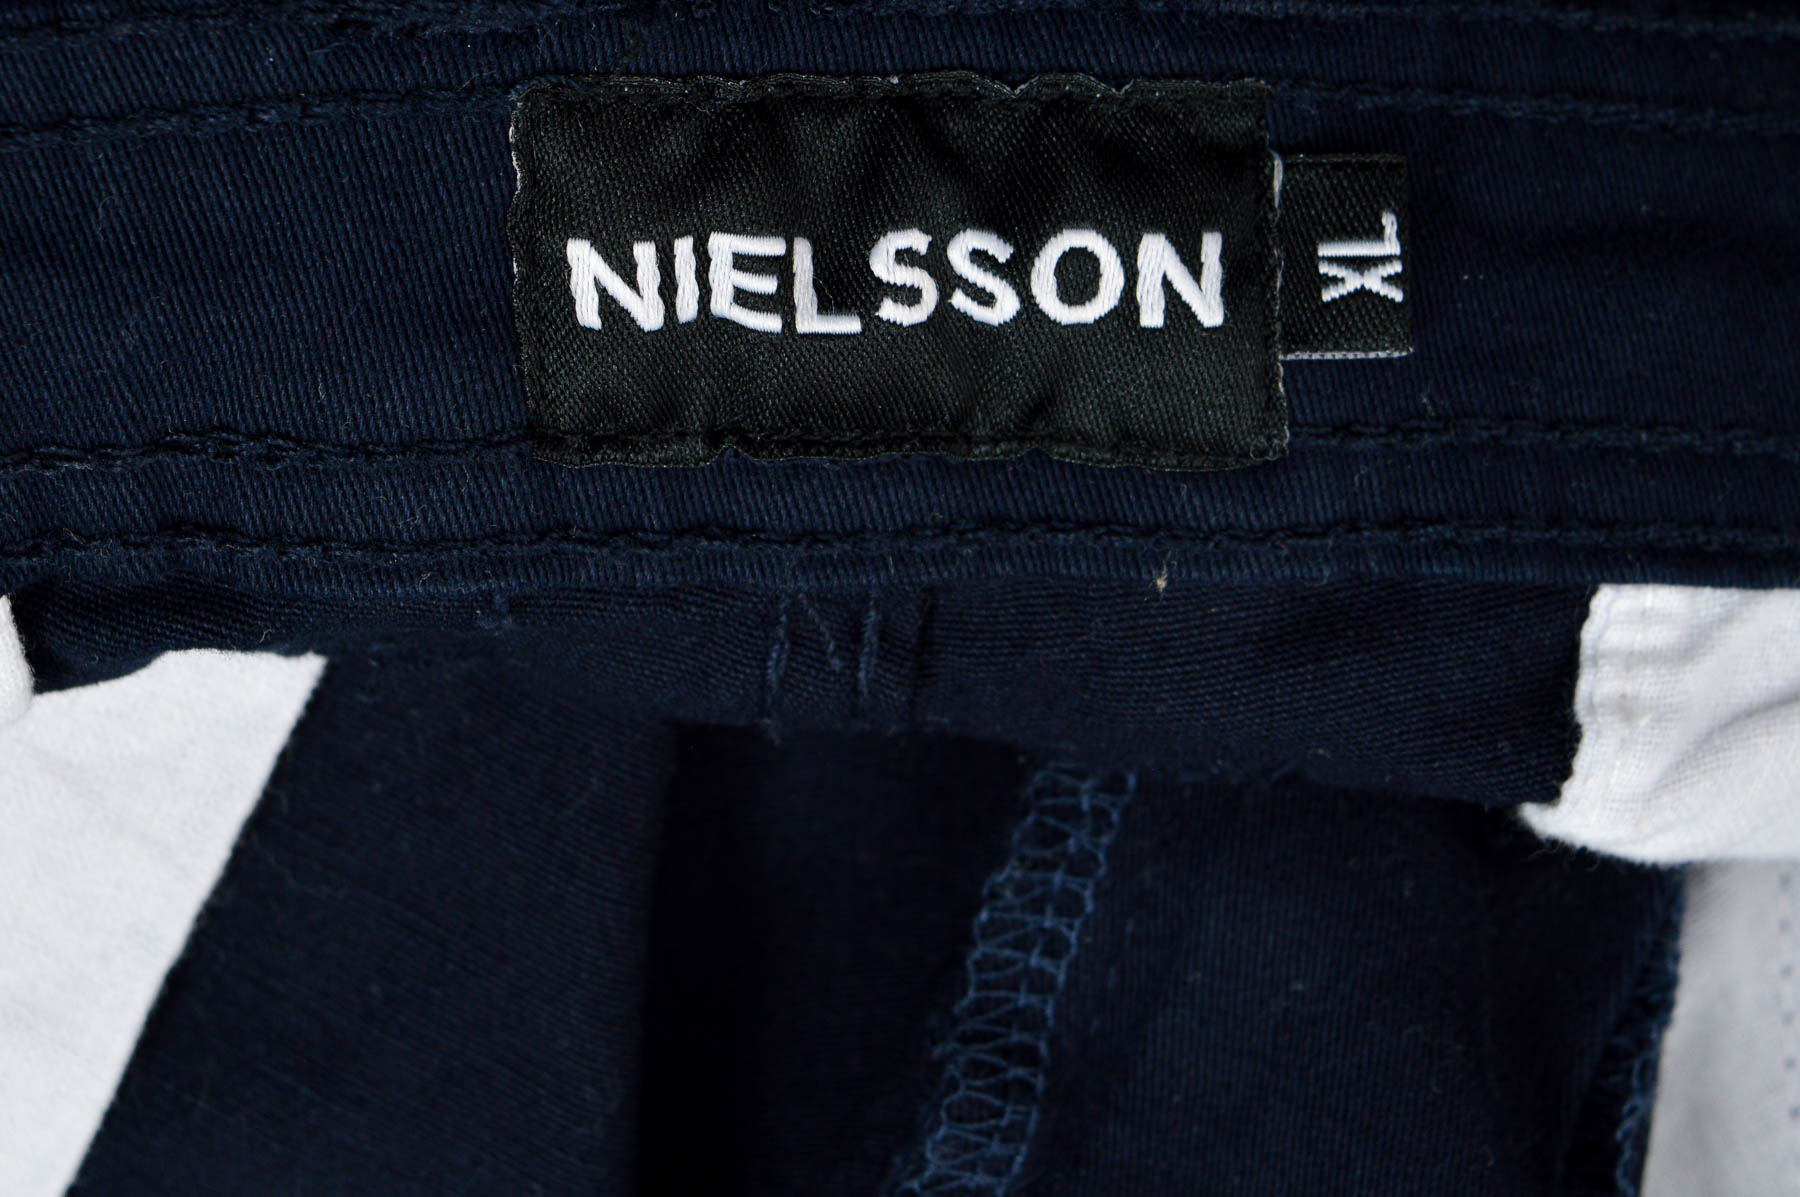 Men's shorts - Nielsson - 2